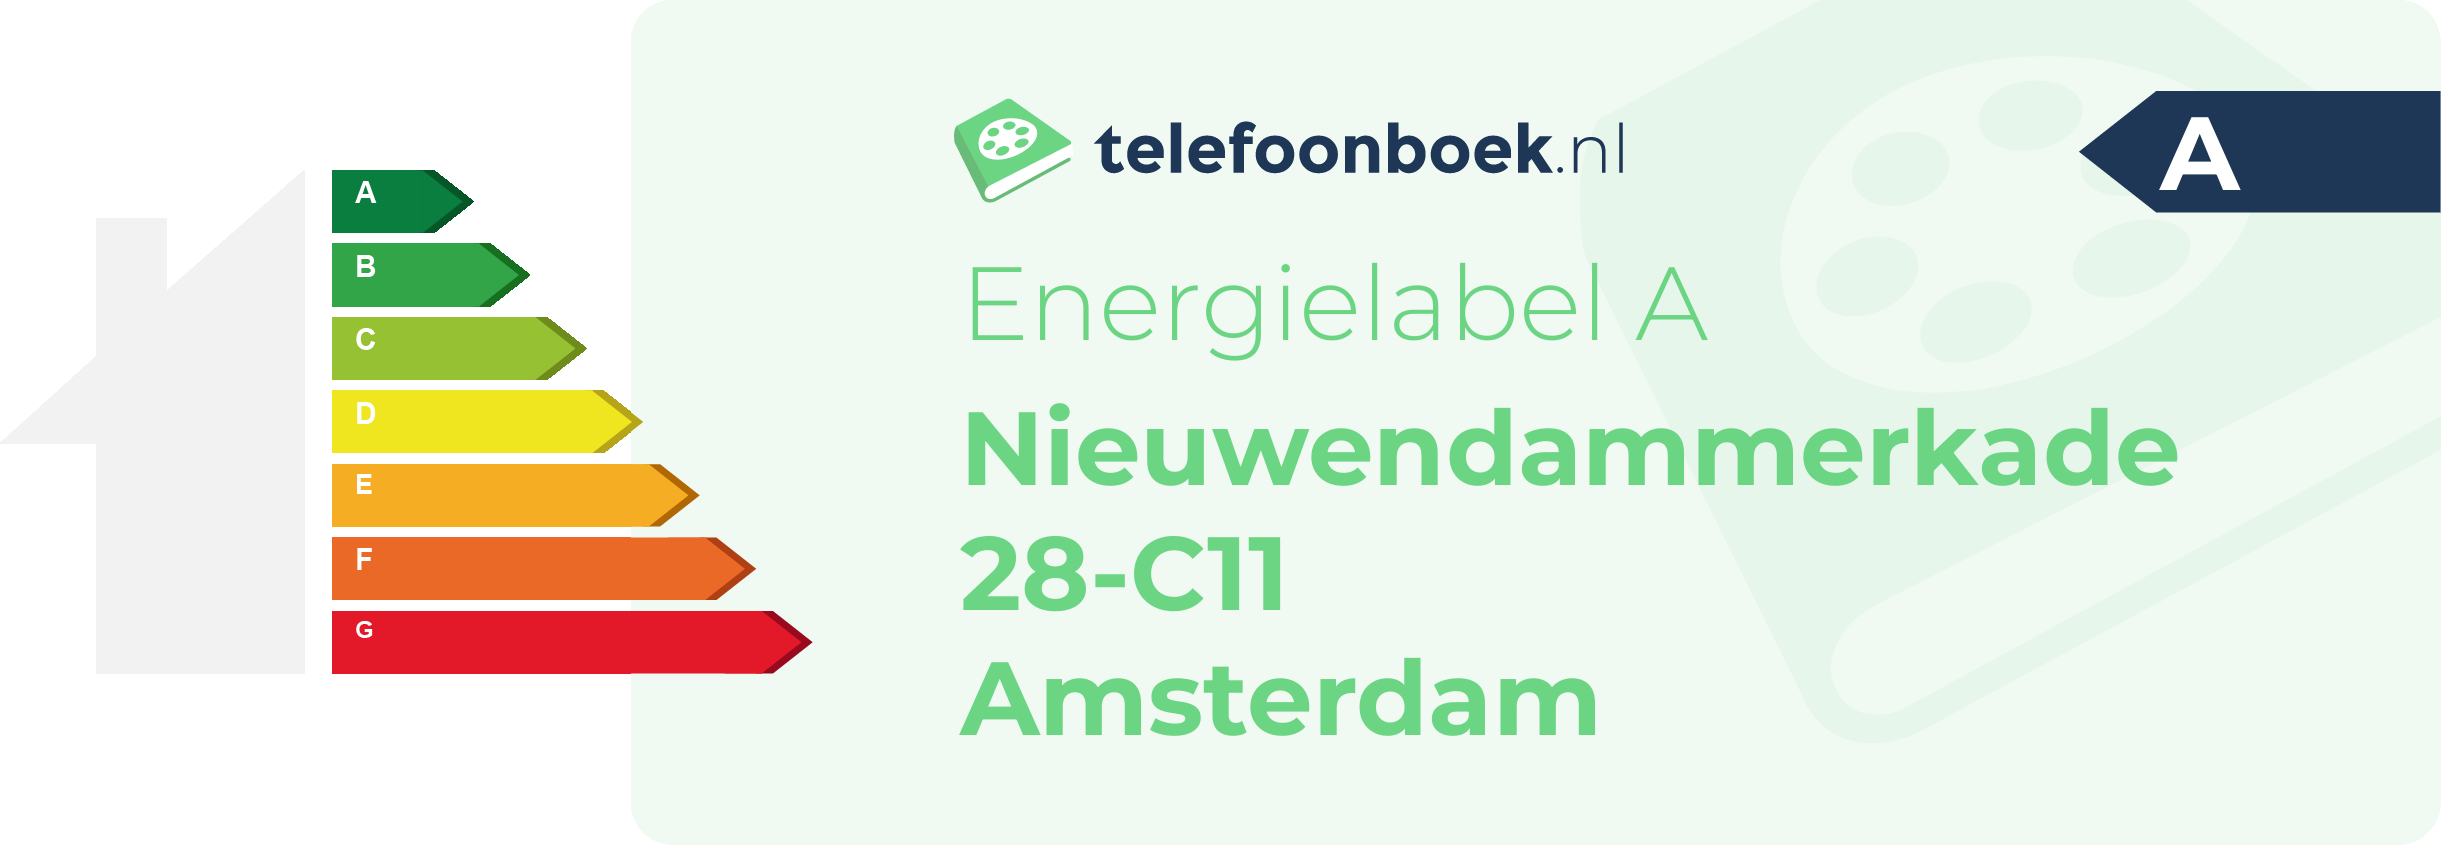 Energielabel Nieuwendammerkade 28-C11 Amsterdam